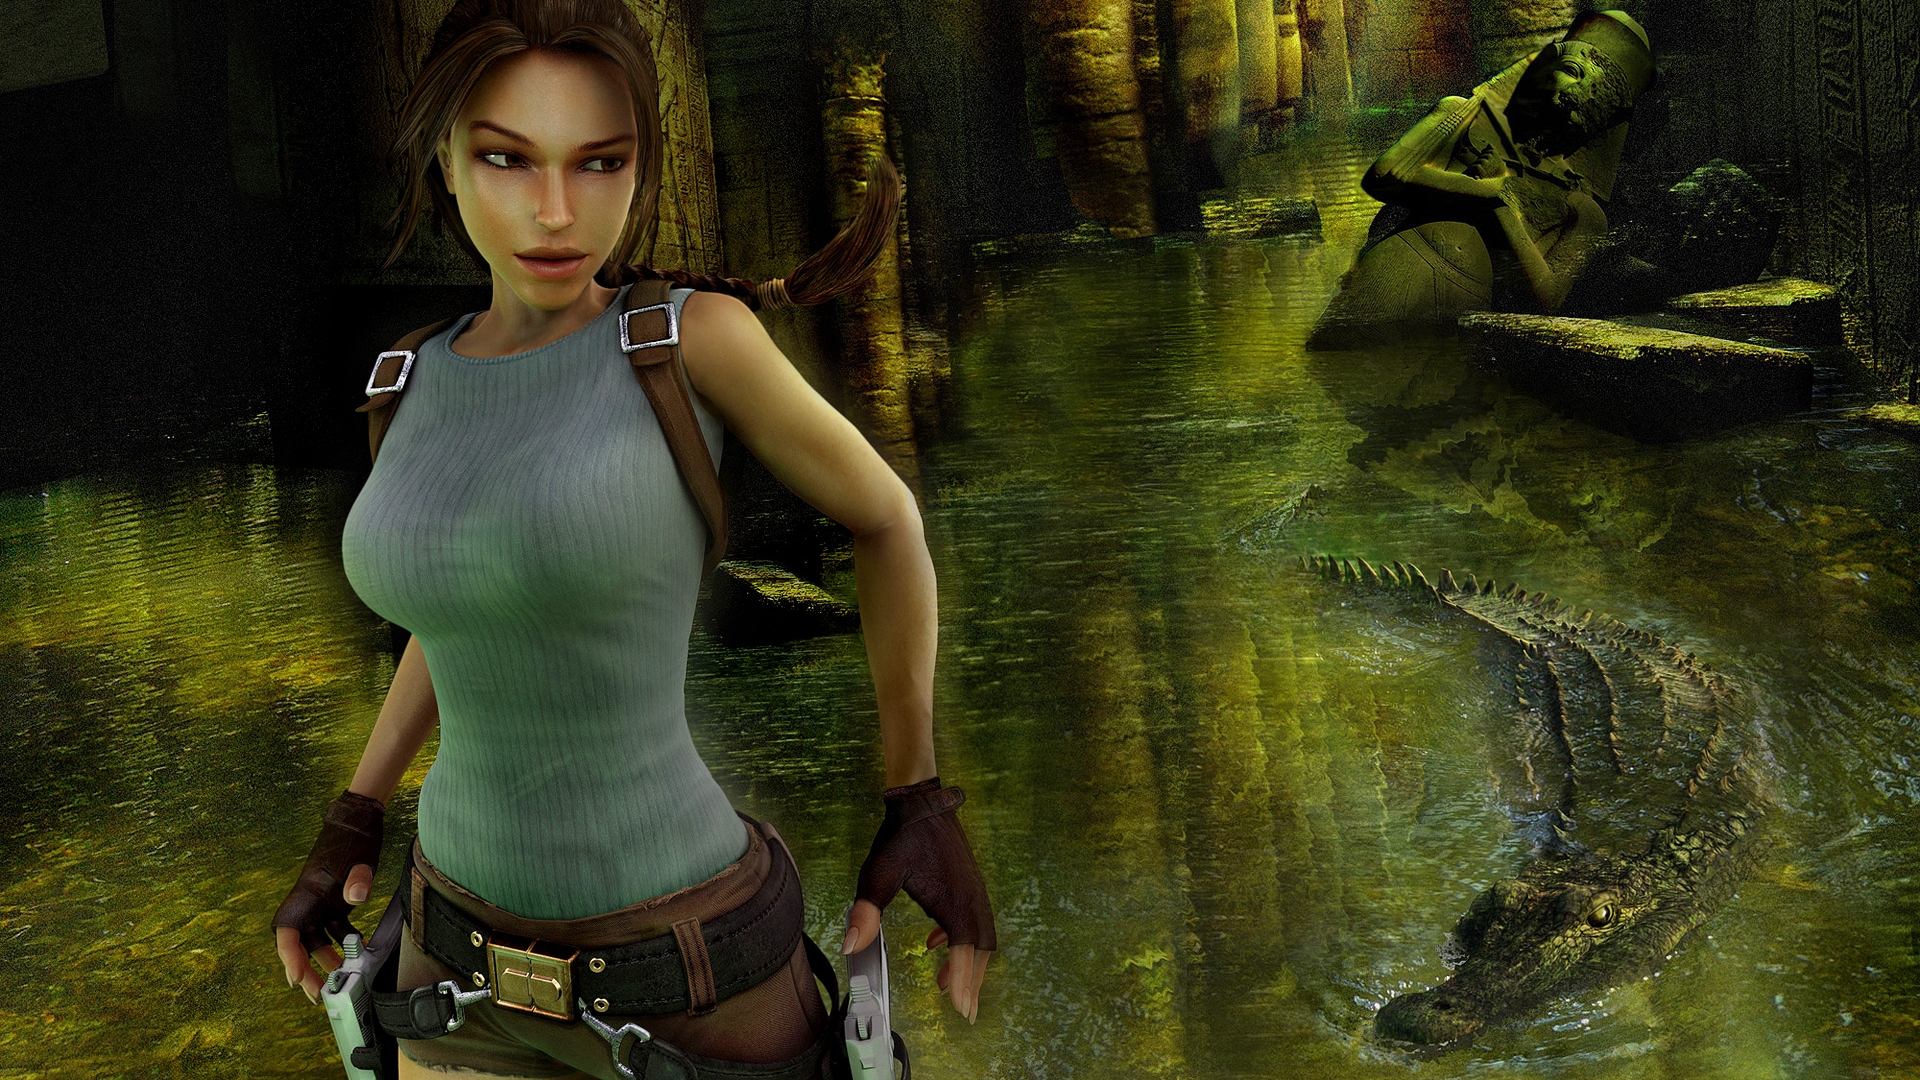 Tomb Raider Hd Wallpaper Background Image 1920x1080 9884